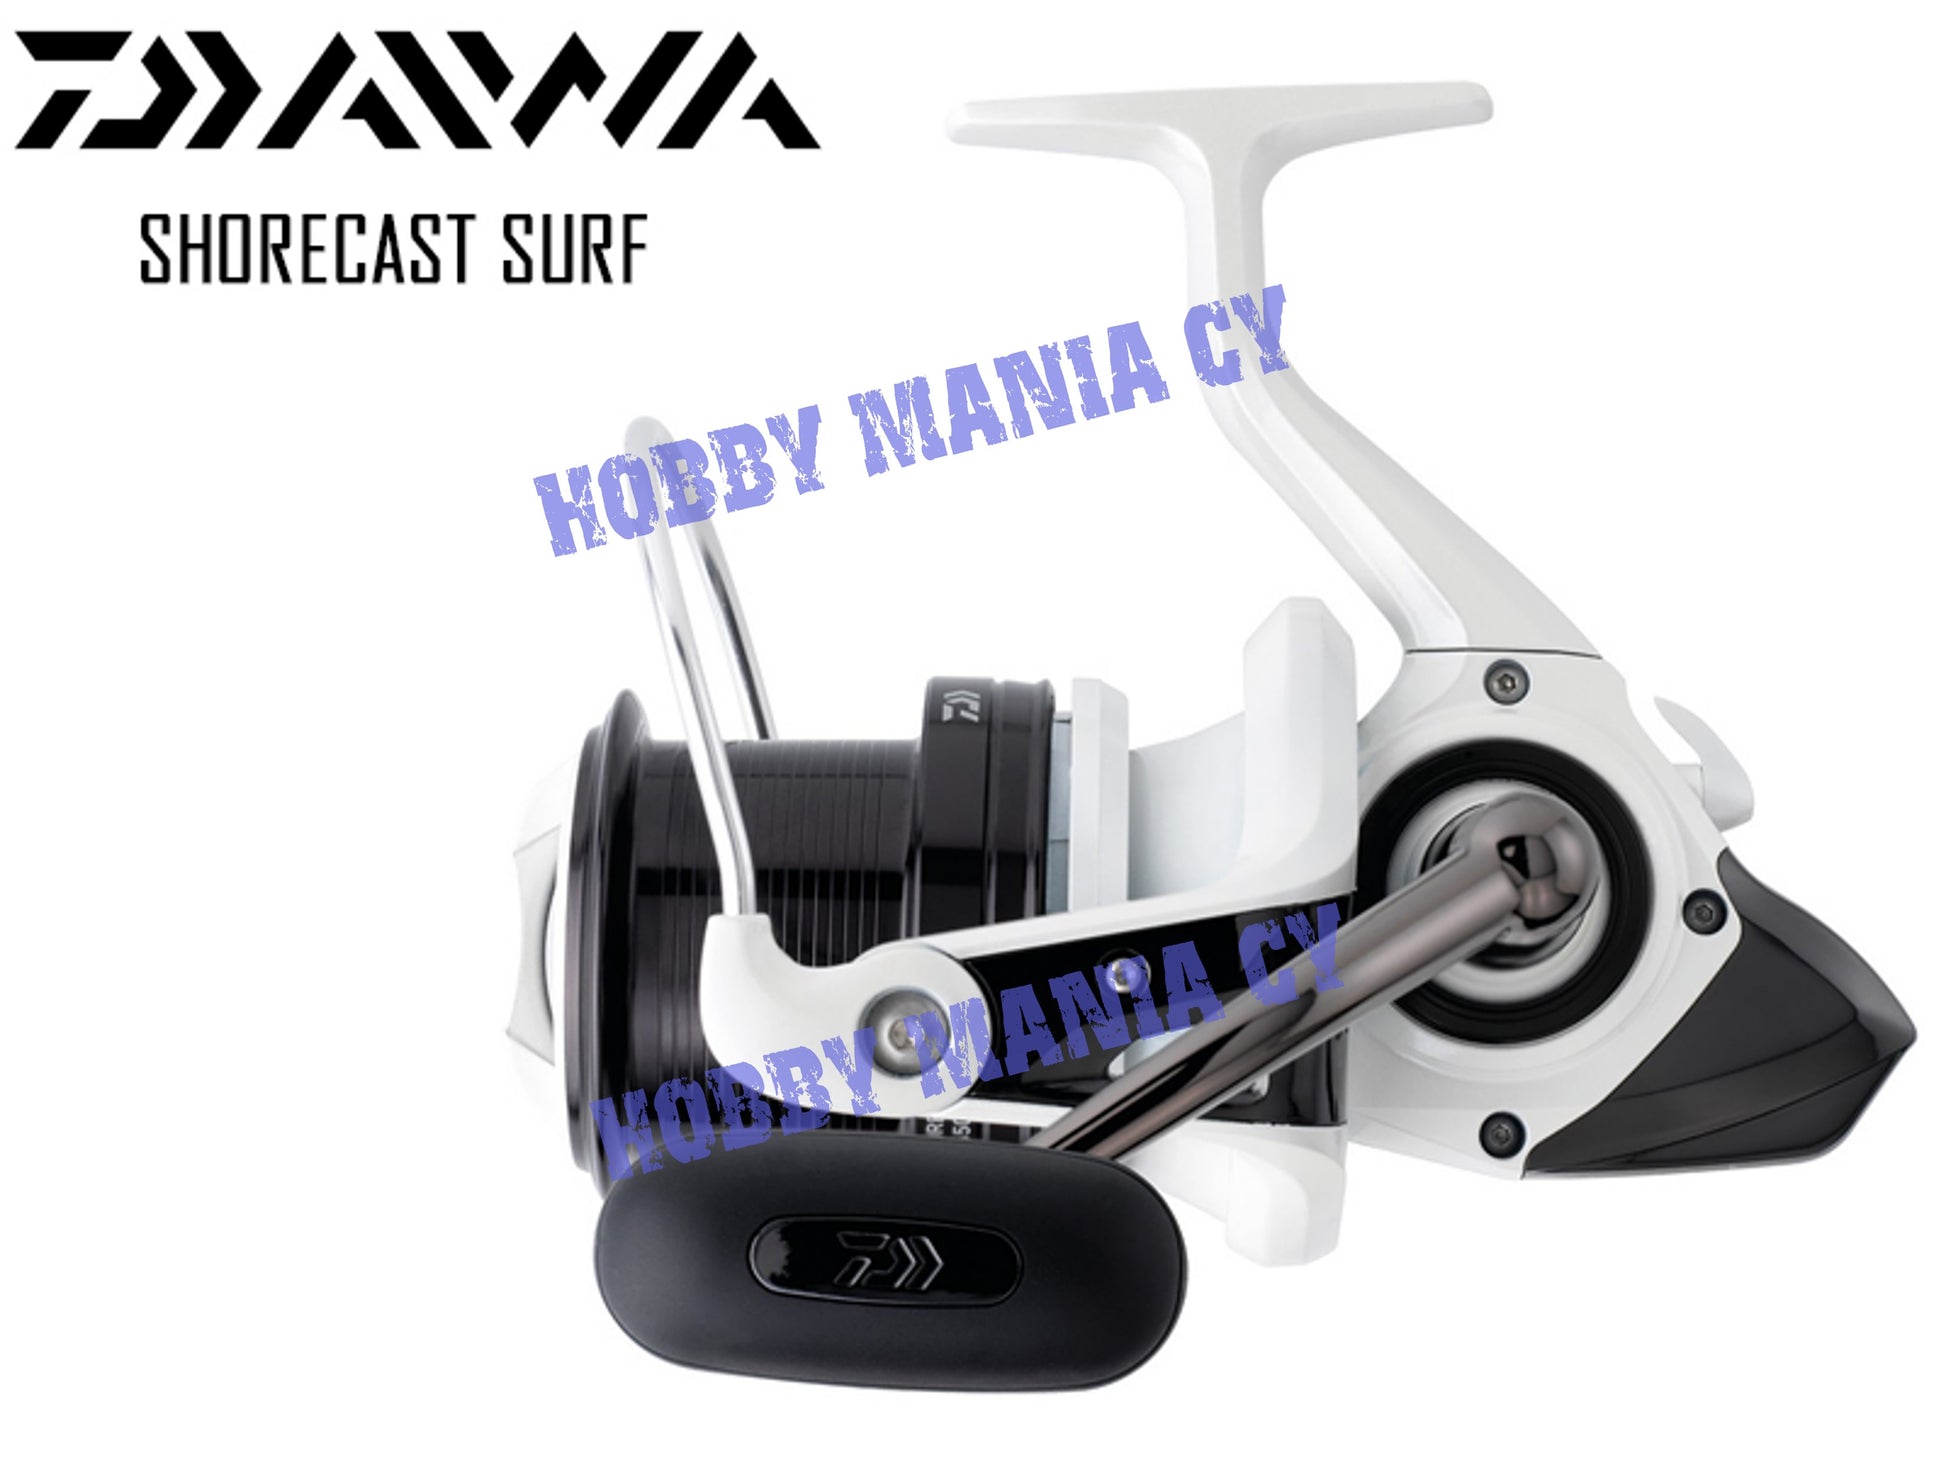 Daiwa Shorecast Surf 5000 A – Hobbymania CY